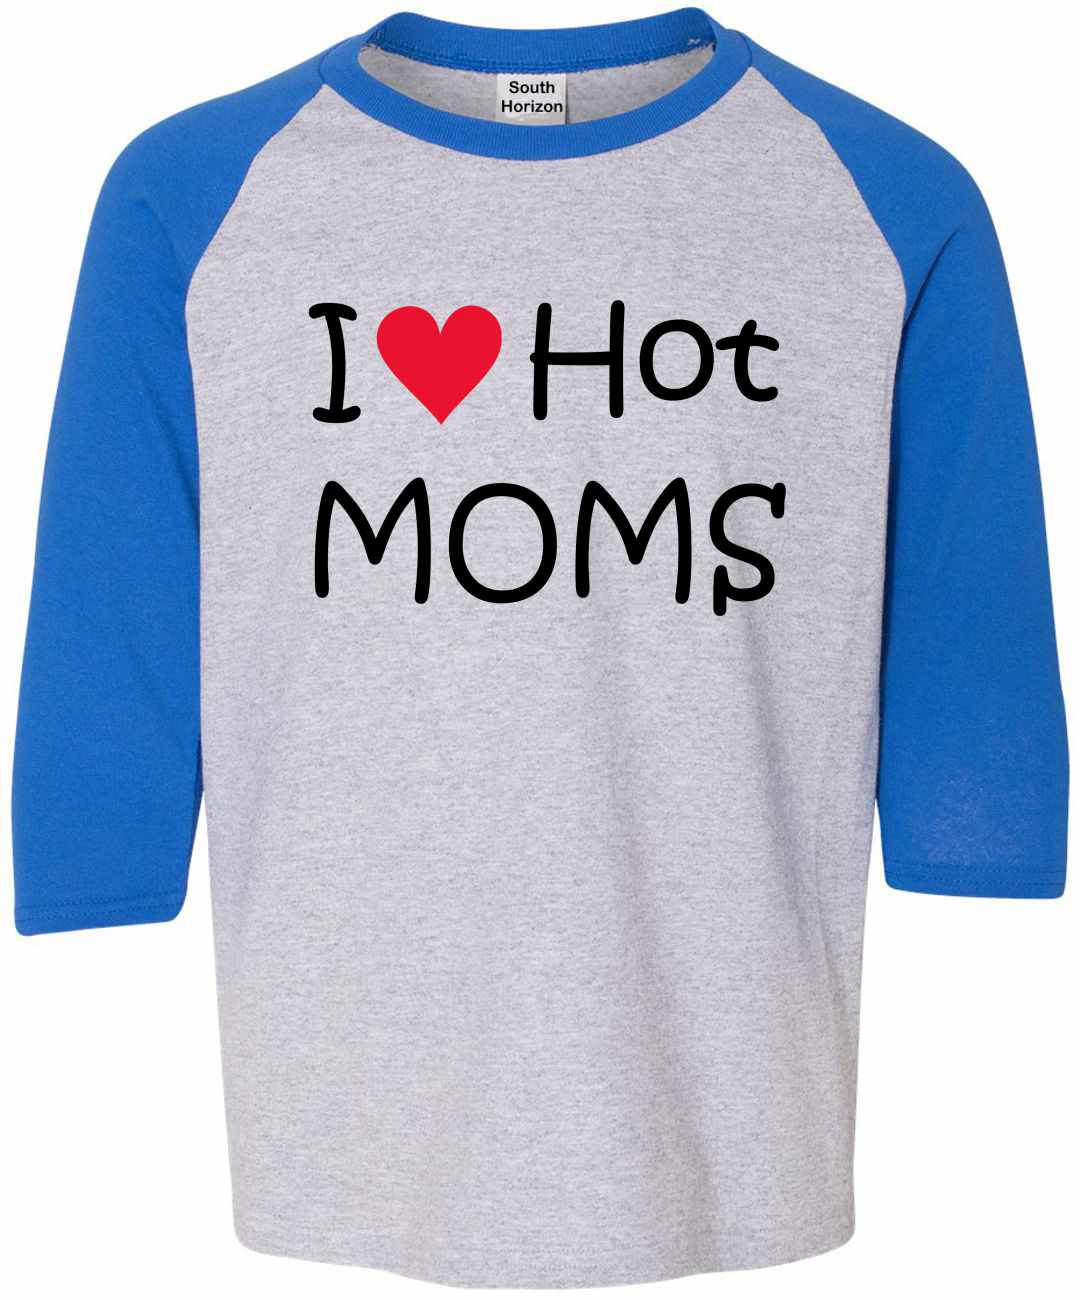 I LOVE HOT MOMS on Youth Baseball Shirt (#577-212)